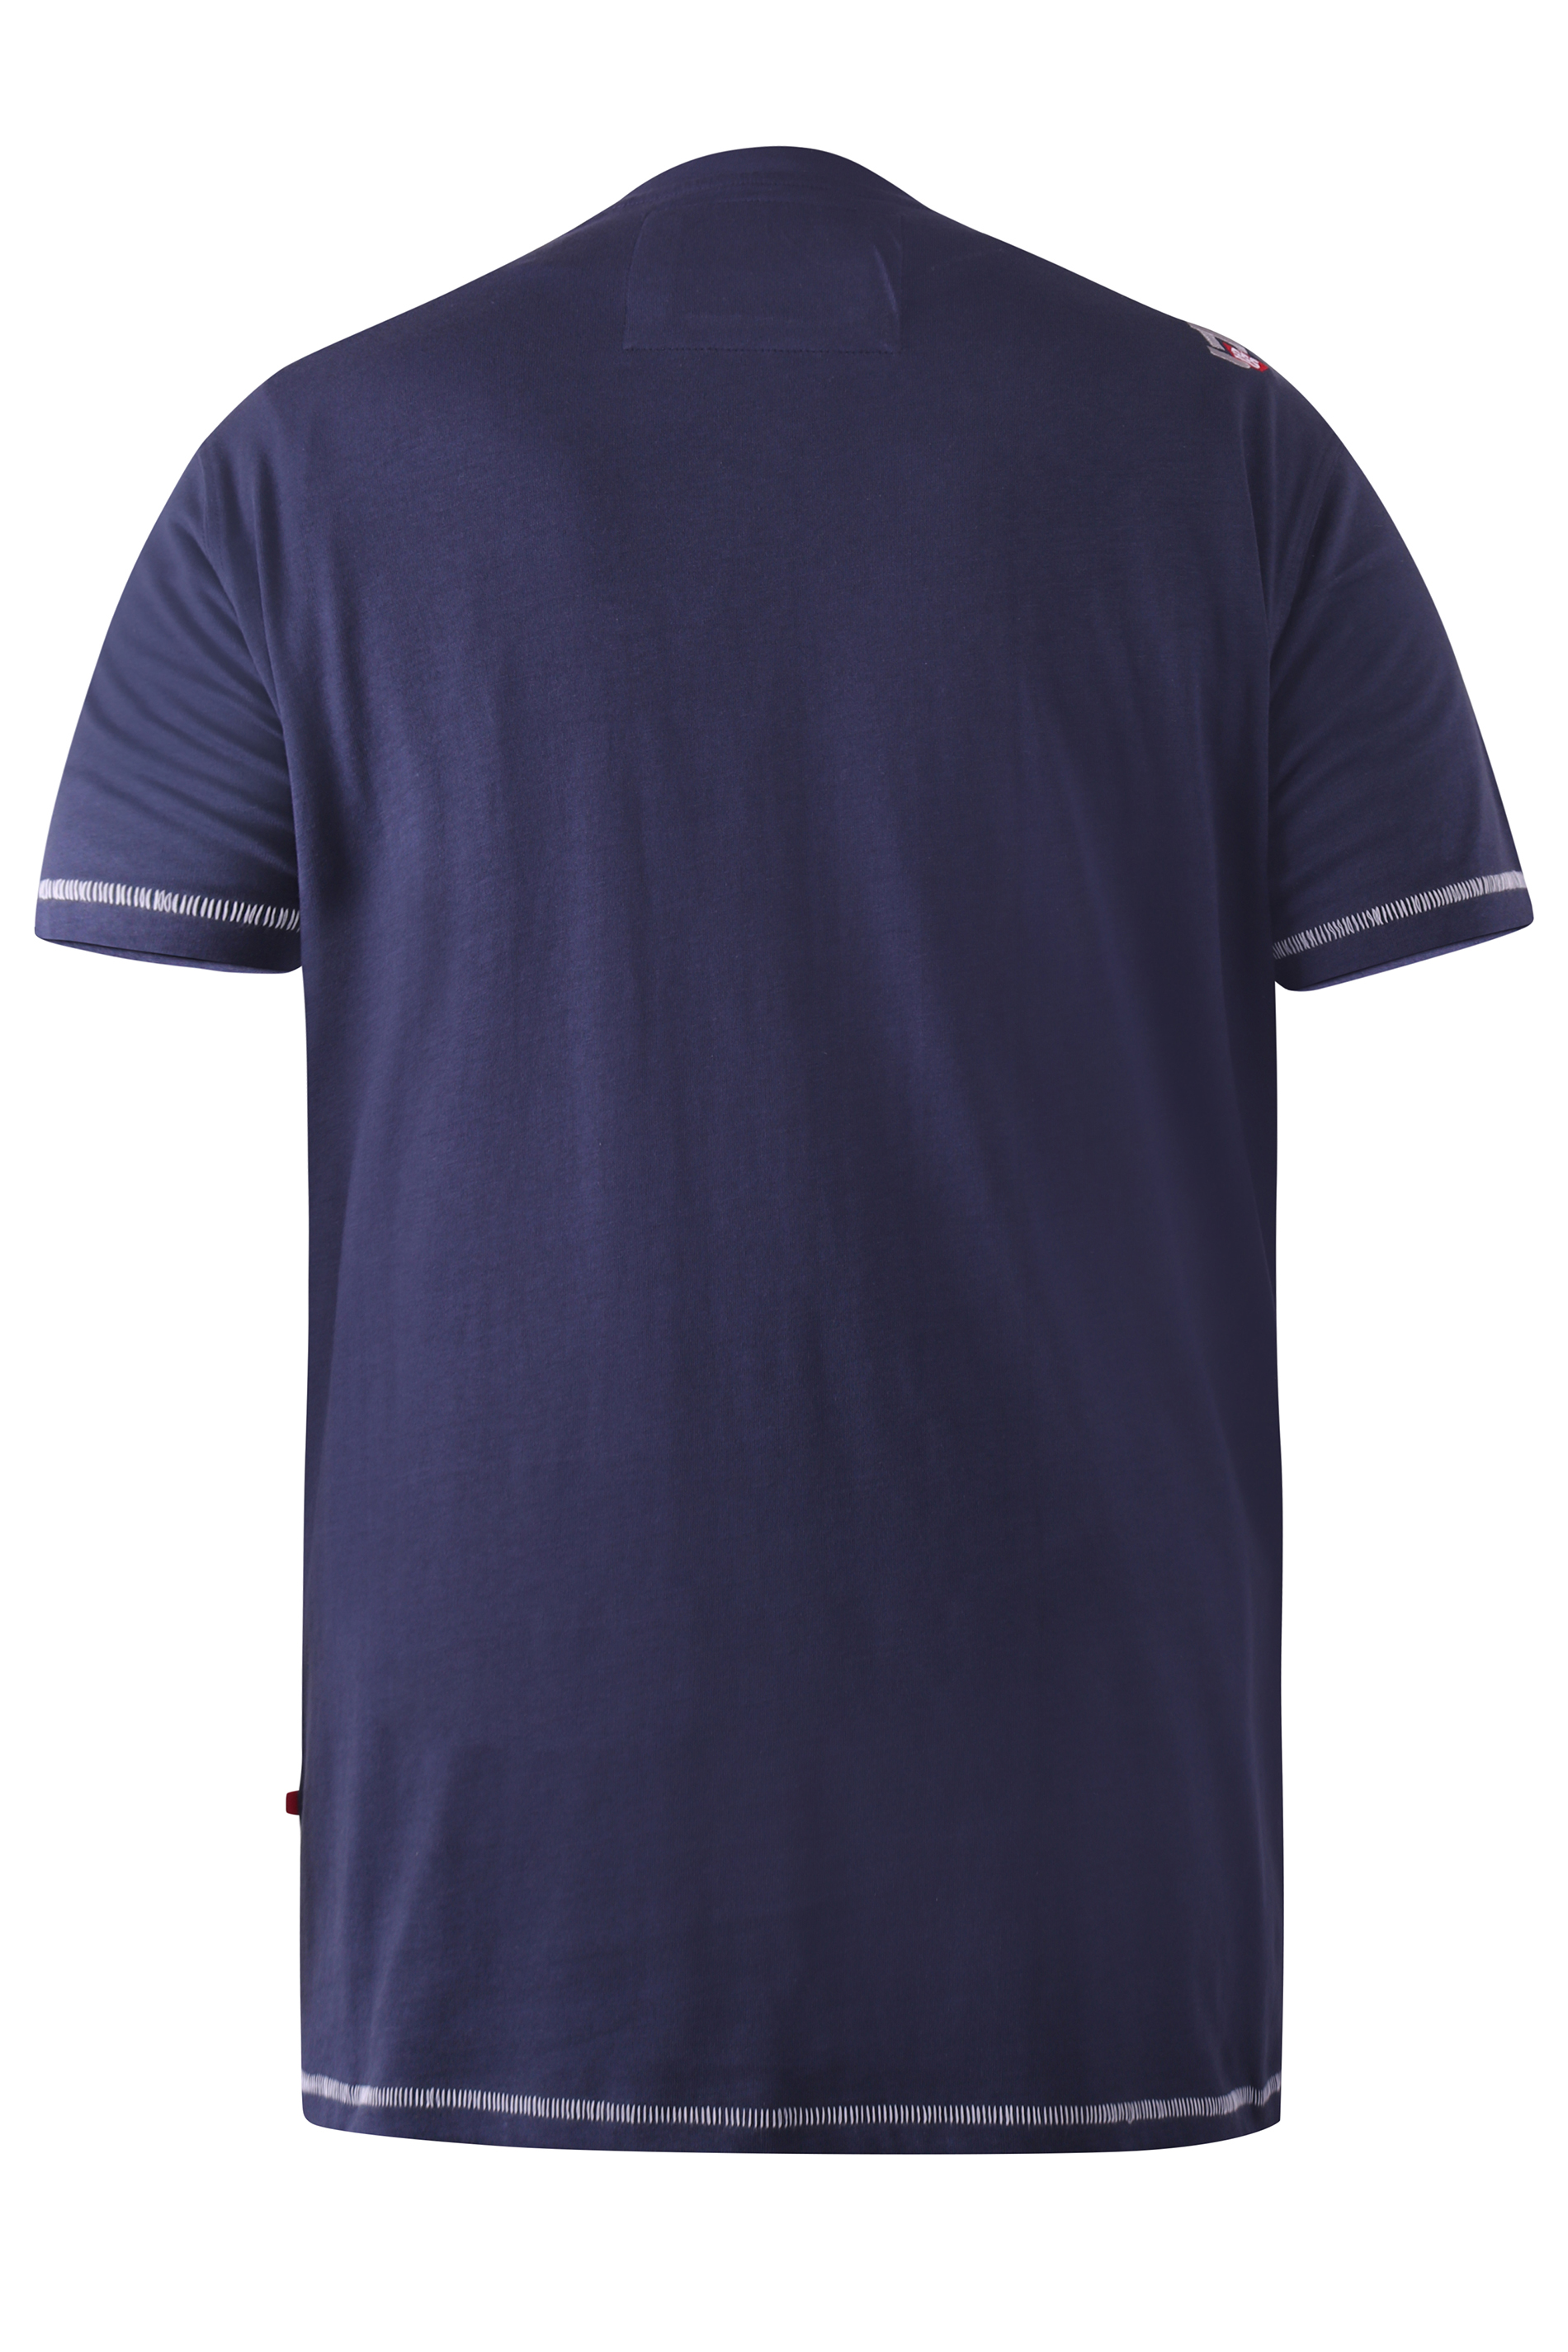 D555 Big & Tall Navy Blue San Francisco Printed T-Shirt | BadRhino 3